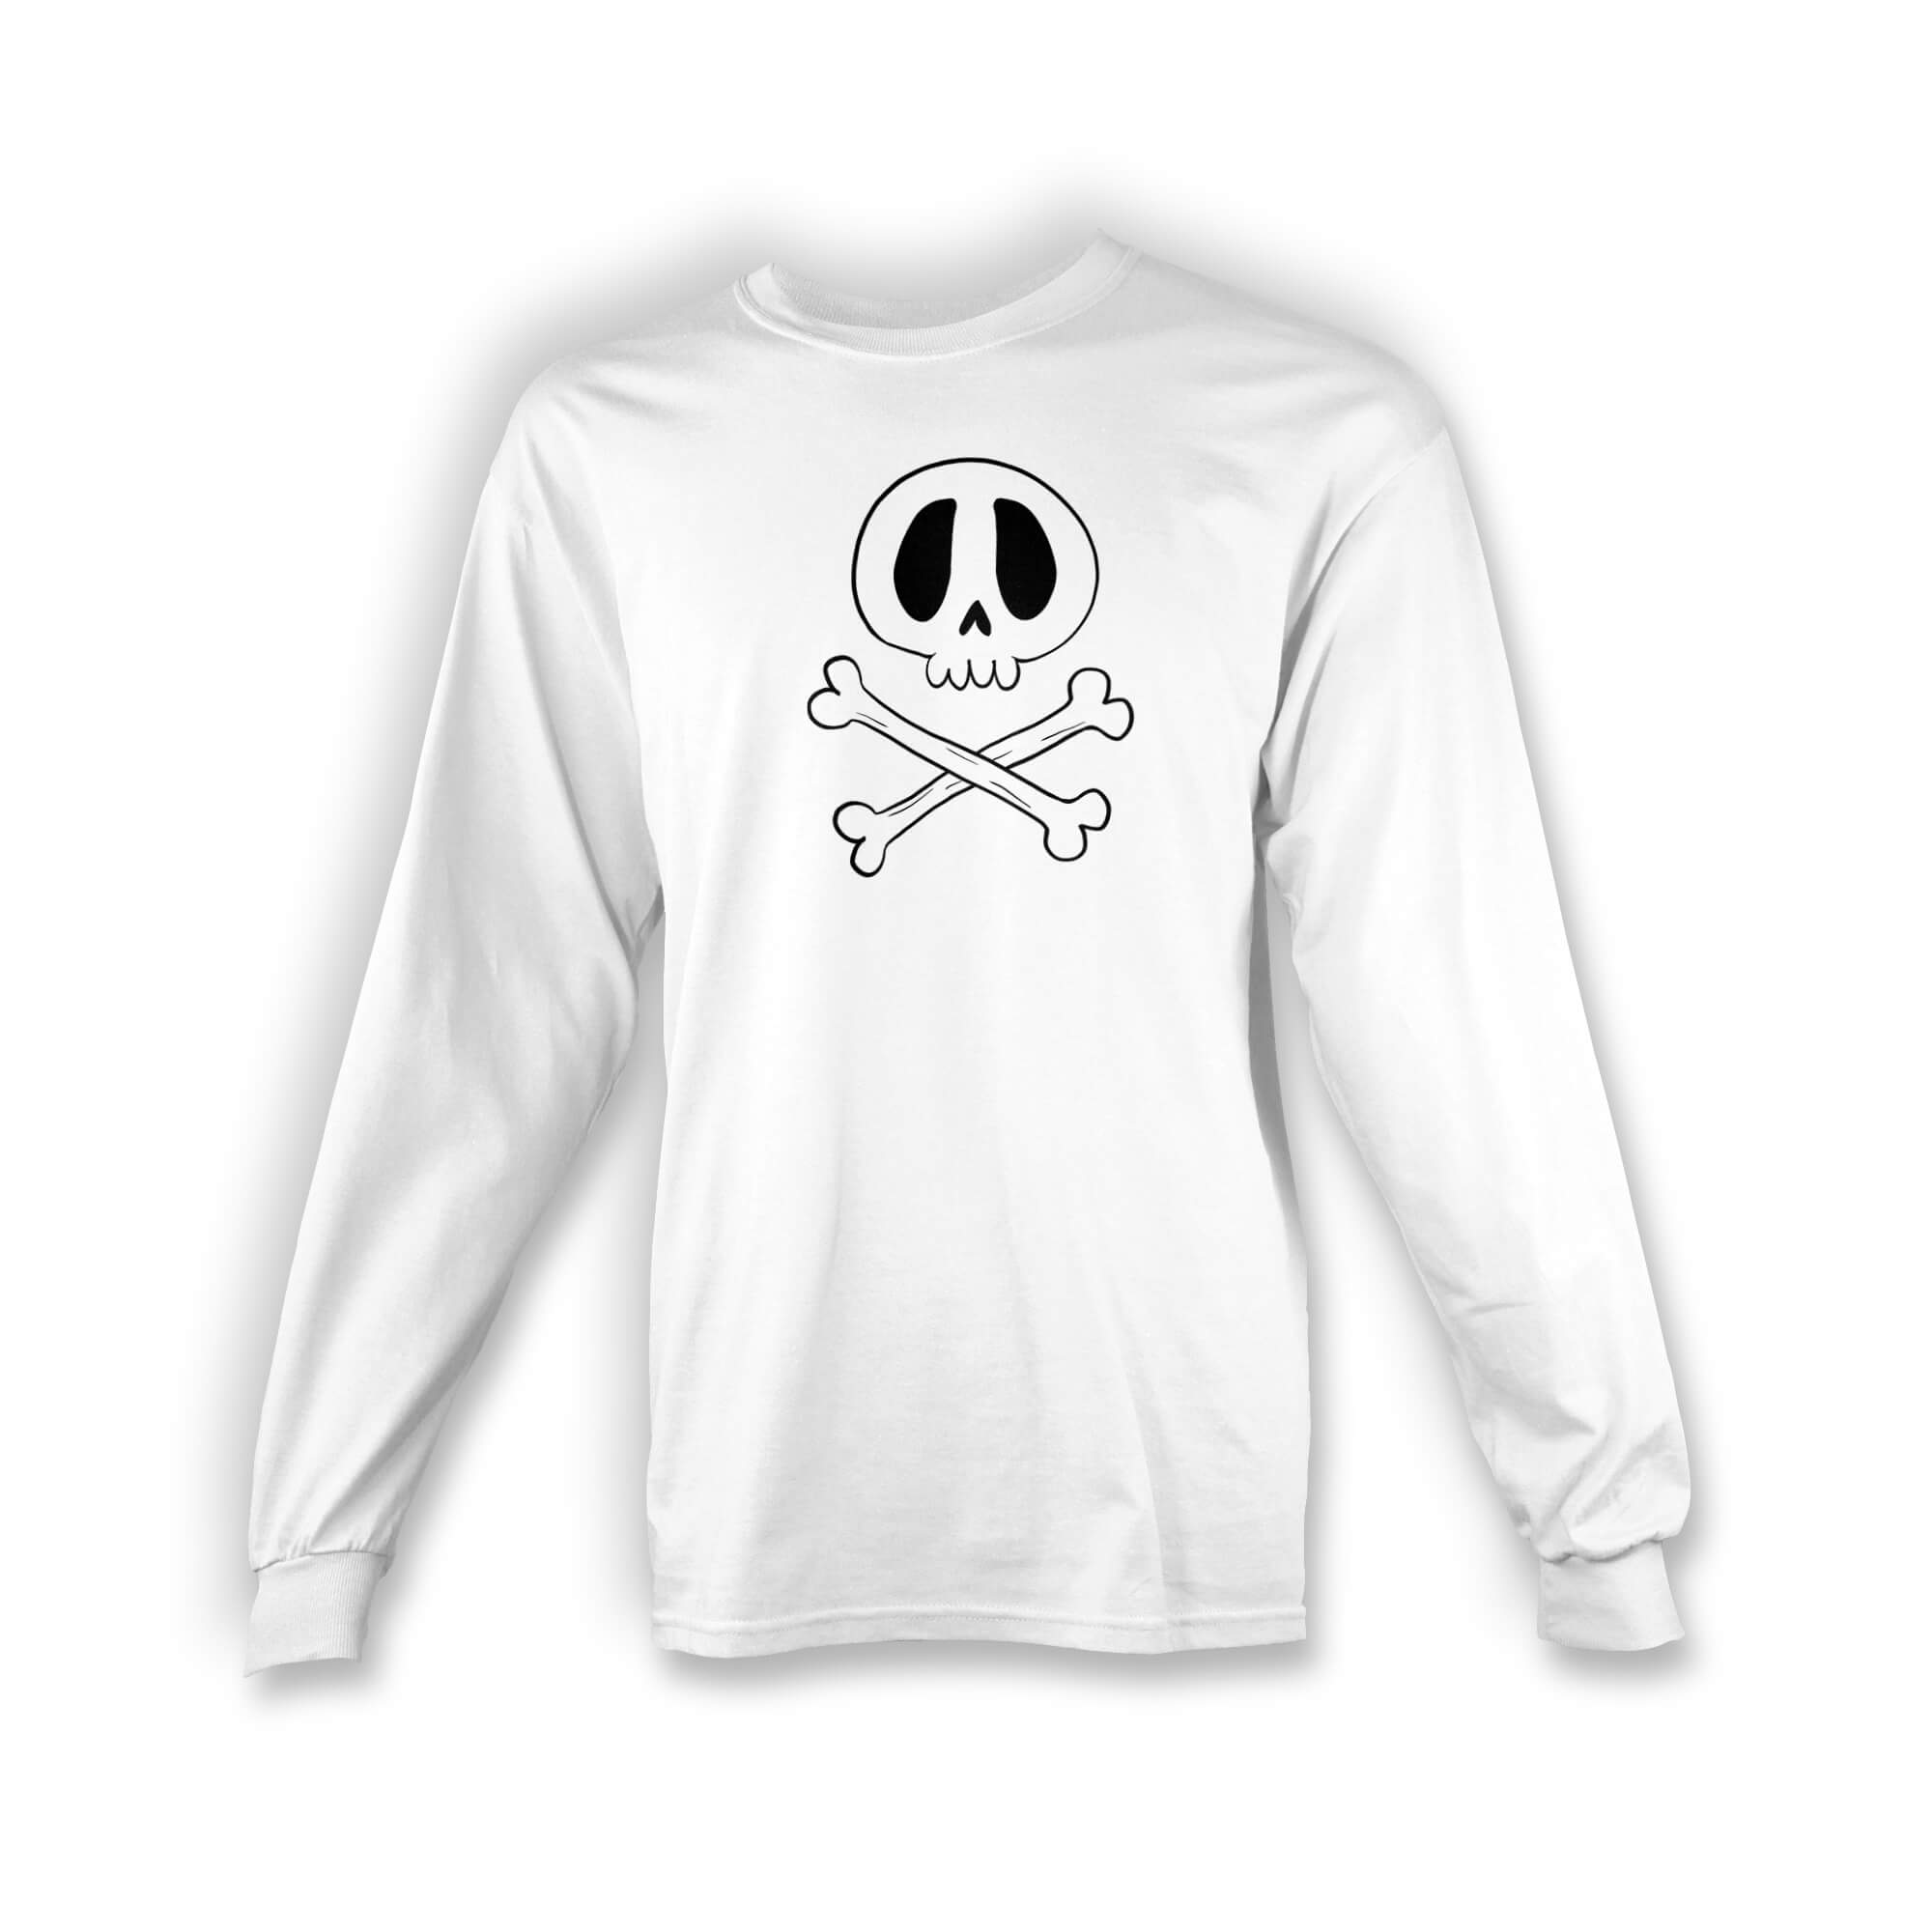 Skull and Bones T-Shirt